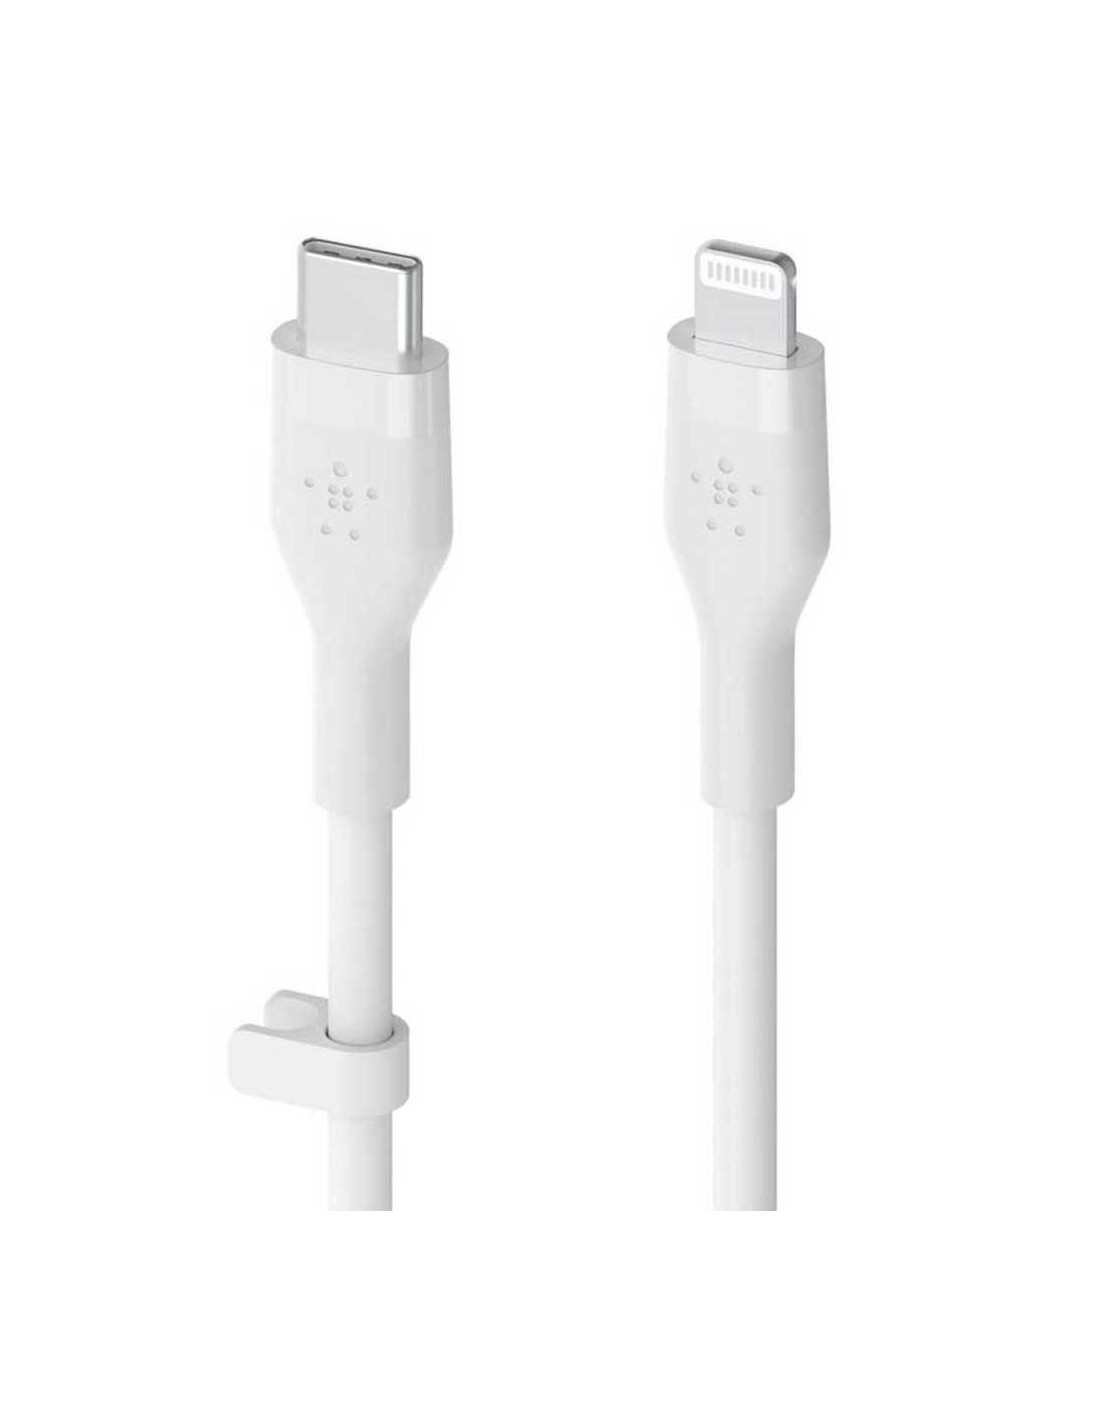 Cable USB C Lightning 2m Blanc 3A uvc - pas cher